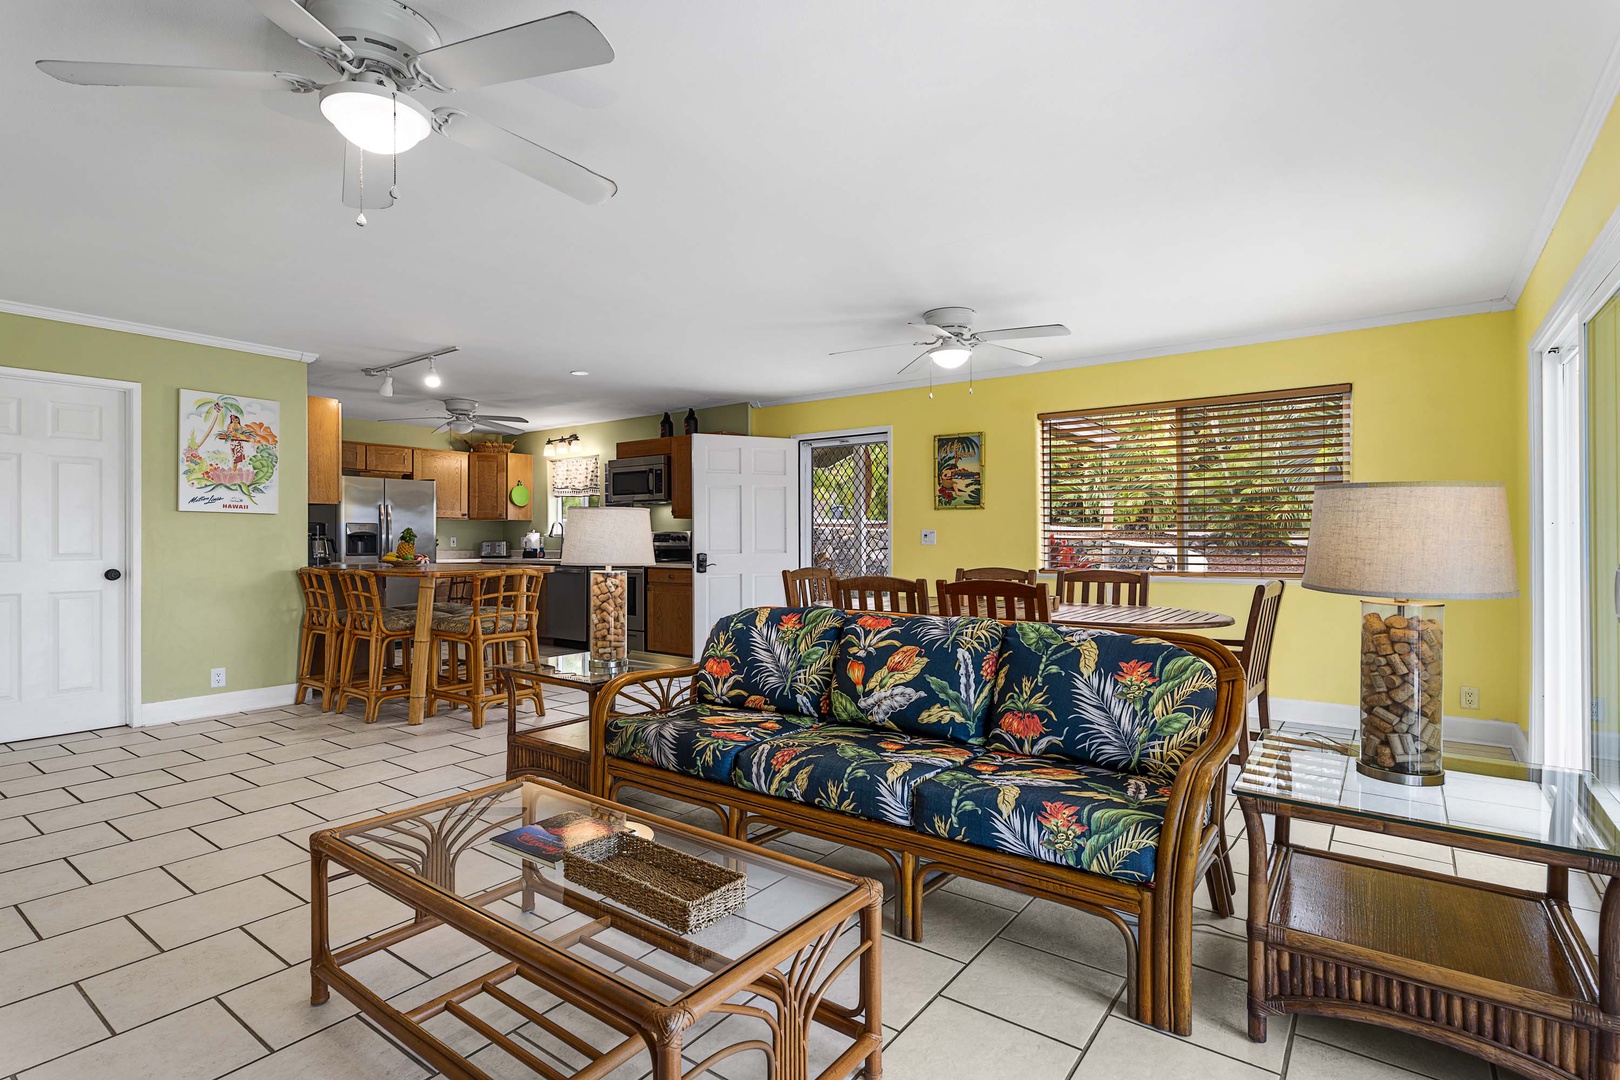 Kailua Kona Vacation Rentals, Hale A Kai - Comfortable tropical furniture